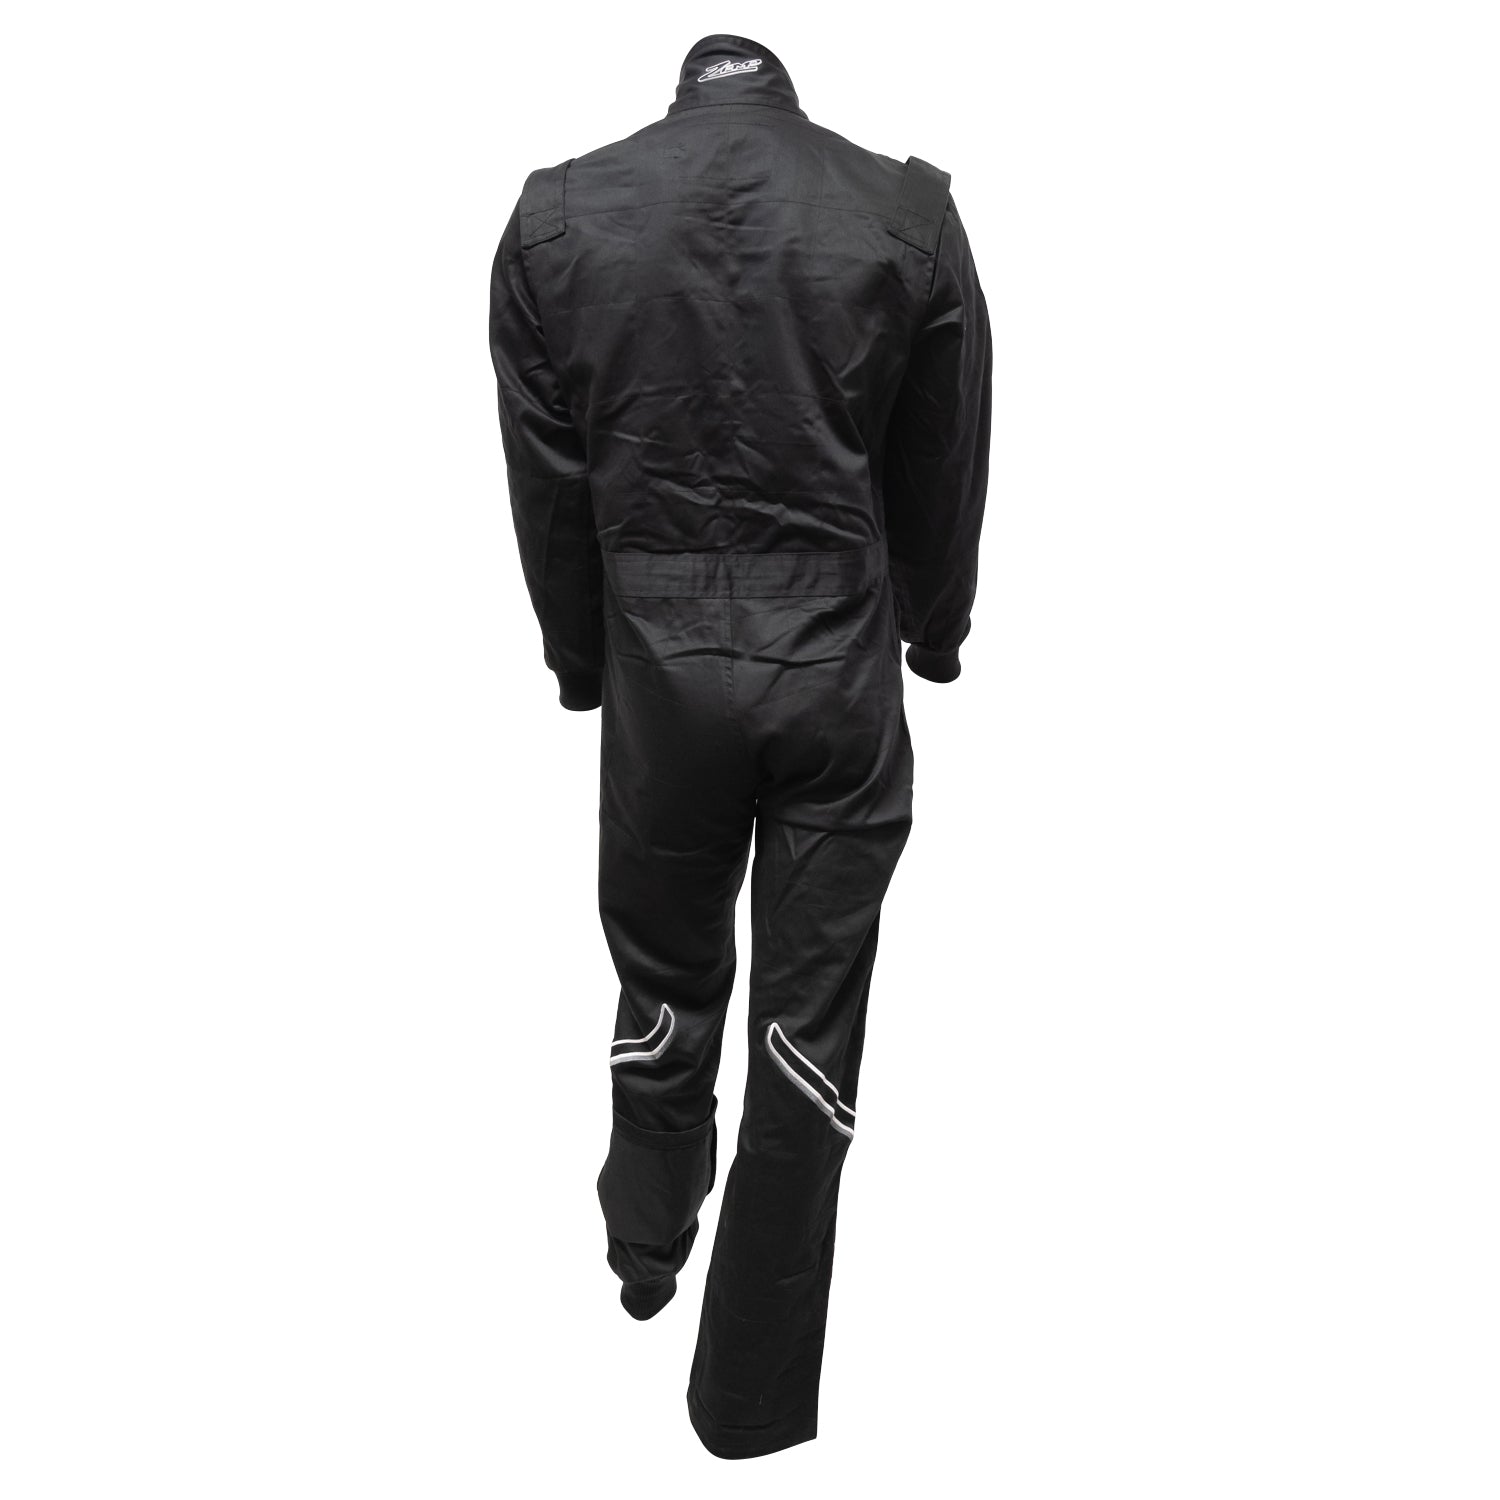 ZAMP Racing ZR-10 Youth Suit Black Medium R010003YM